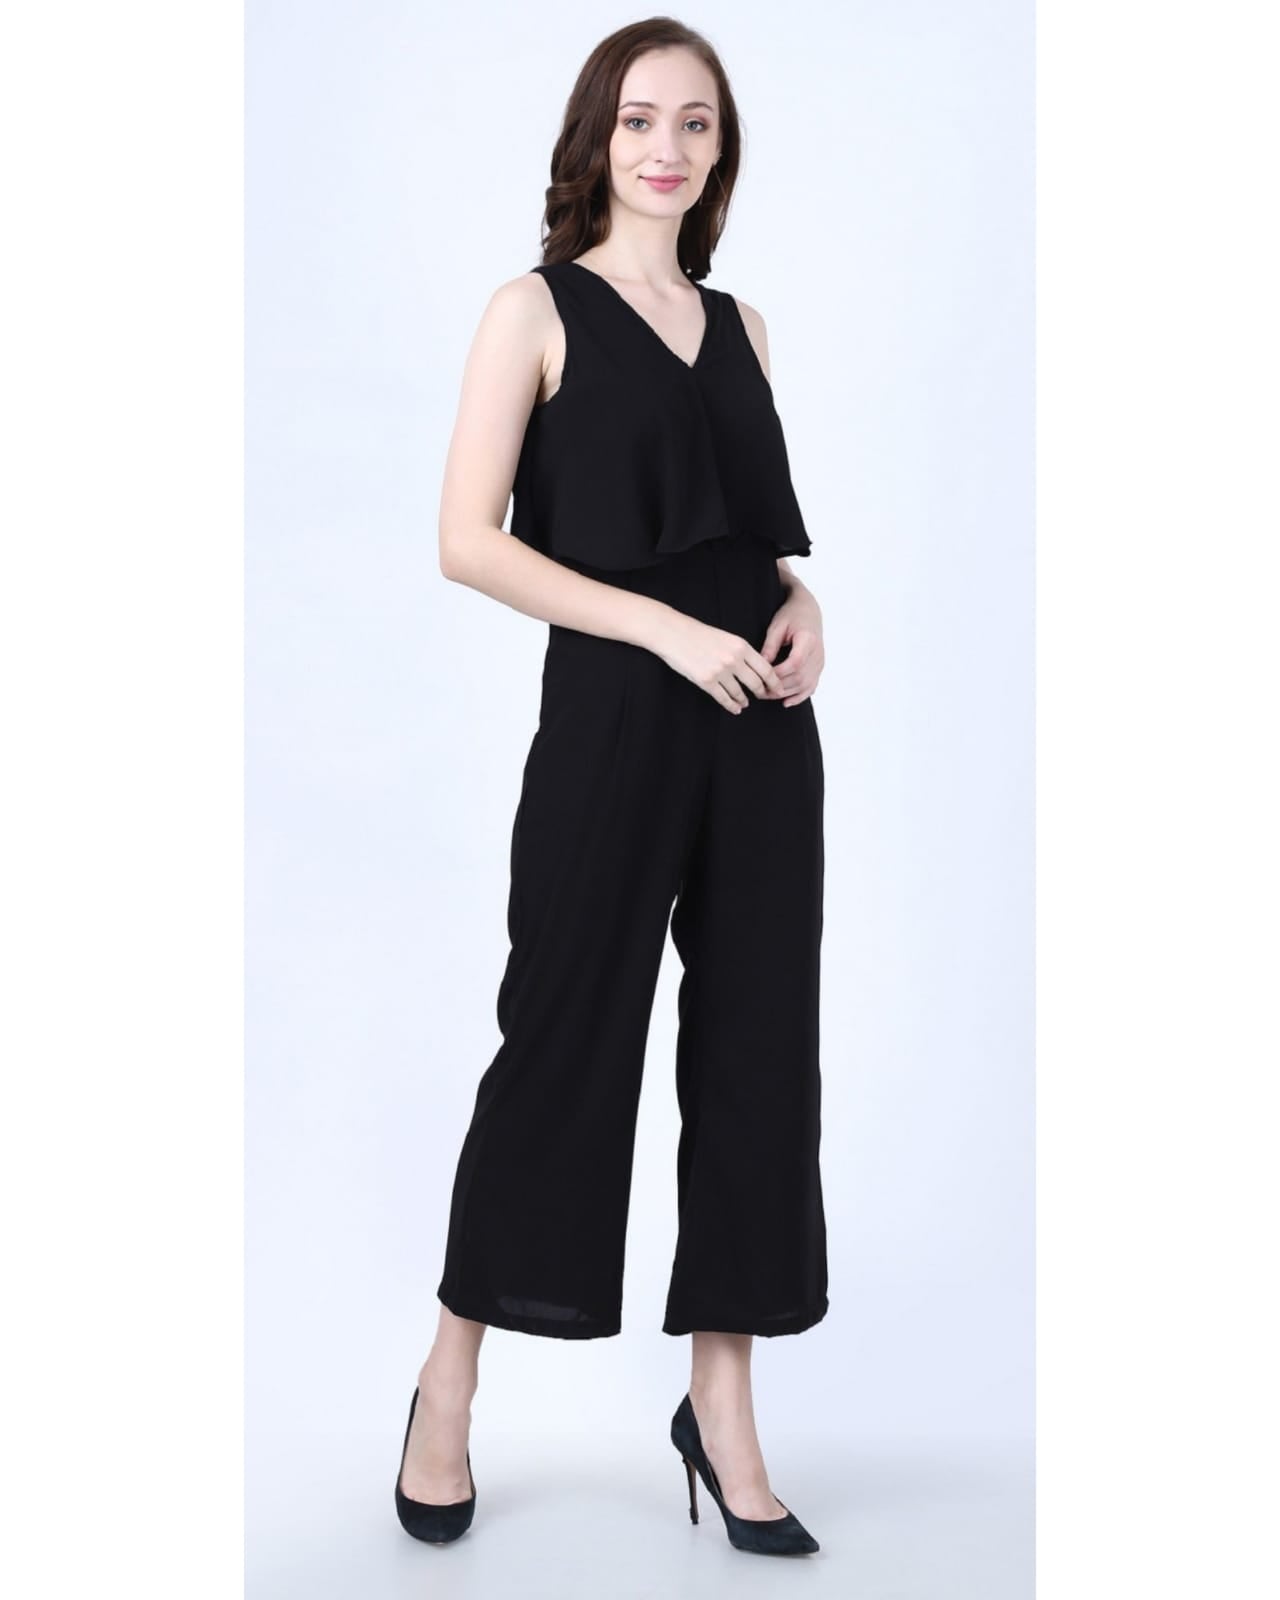 Swagy Women's Black Color Solid Full Length Sleeveless Regular Jumpsuit